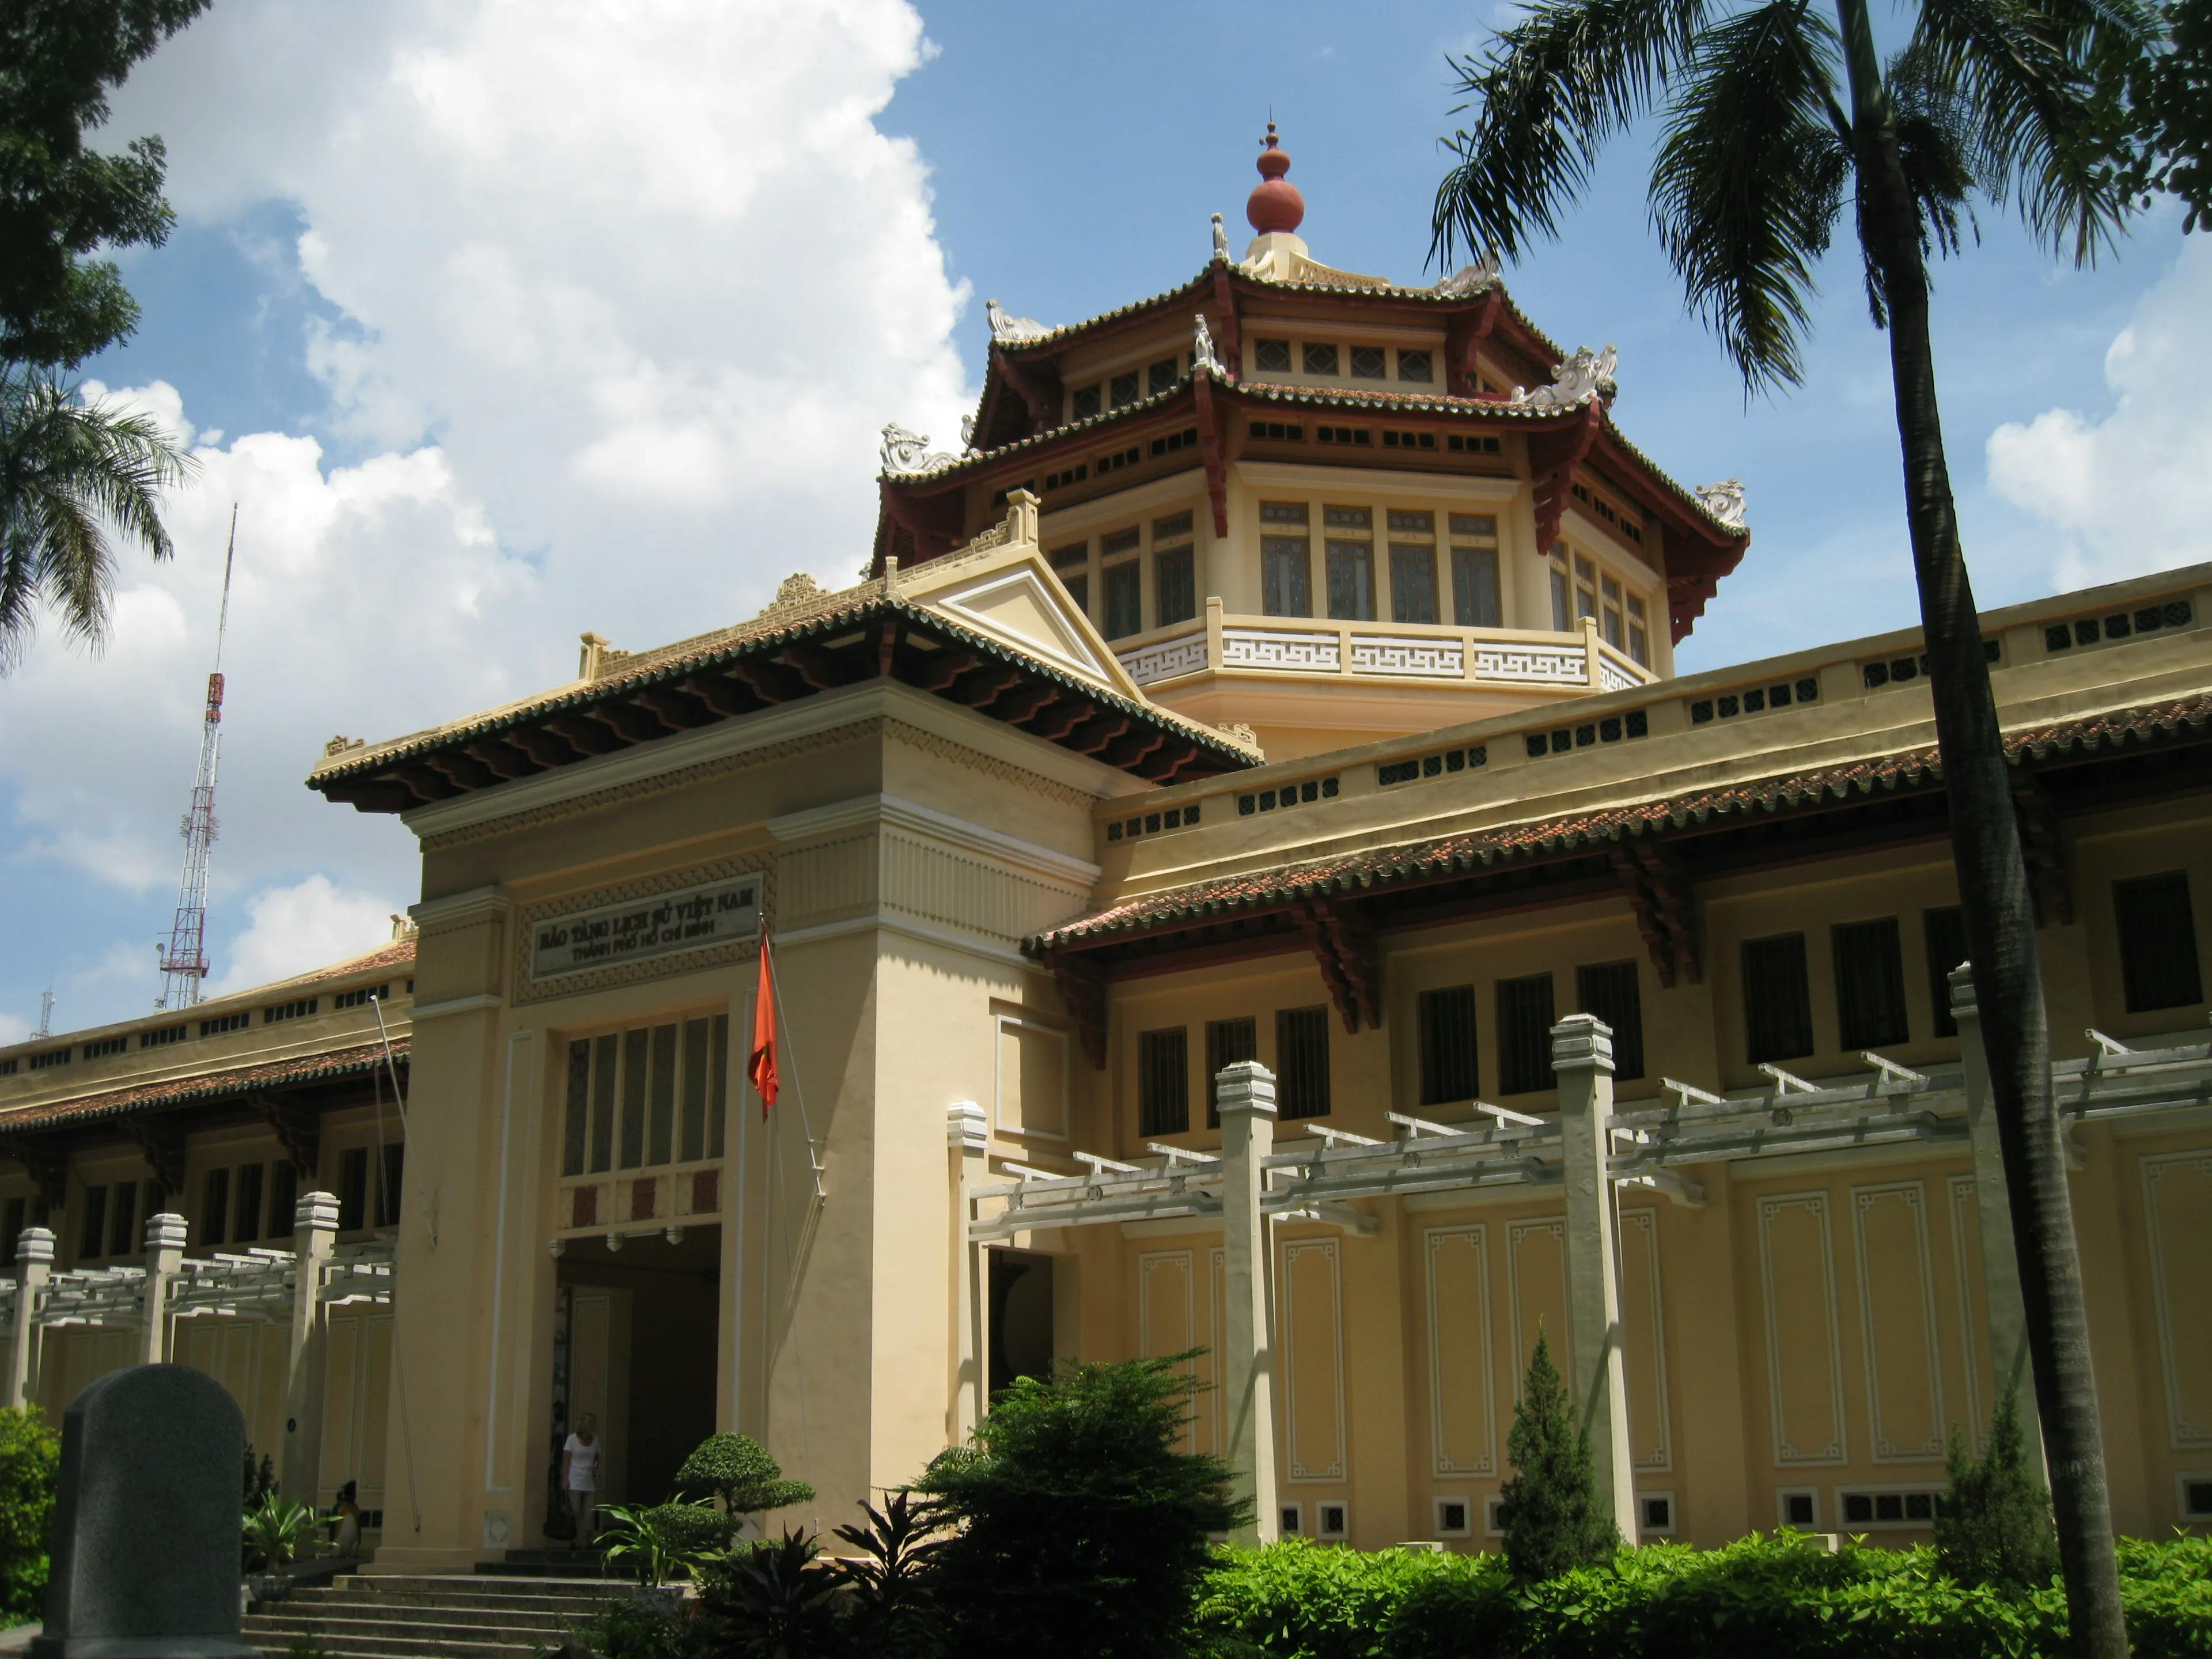 History Museum in HCMC

